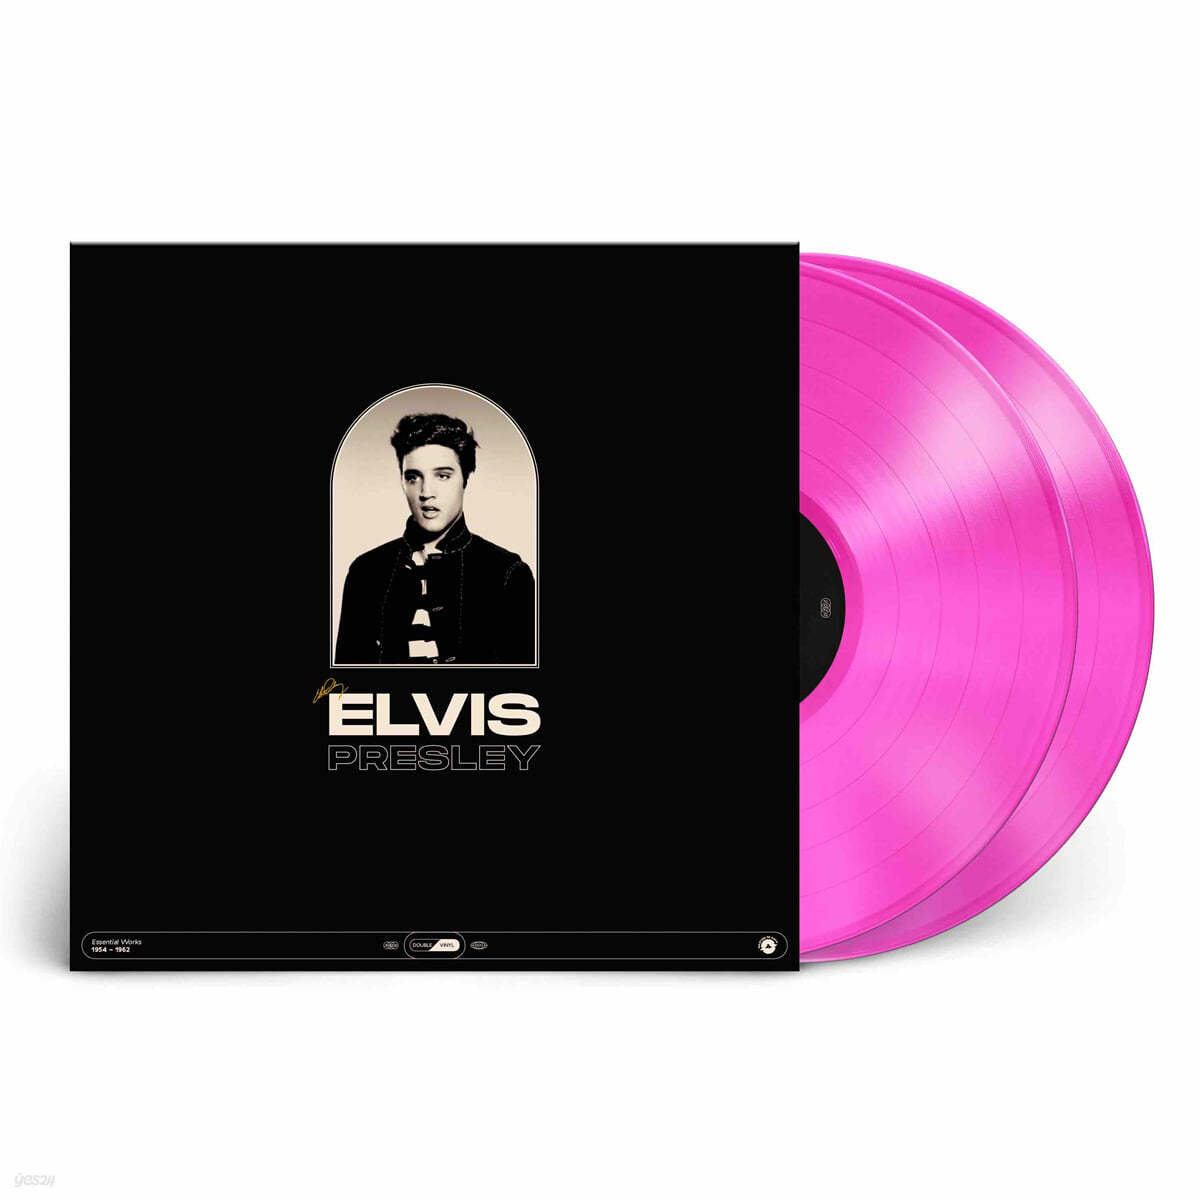 Elvis Presley (엘비스 프레슬리) - 베스트 30 선곡집 [핫핑크 컬러 2LP] 